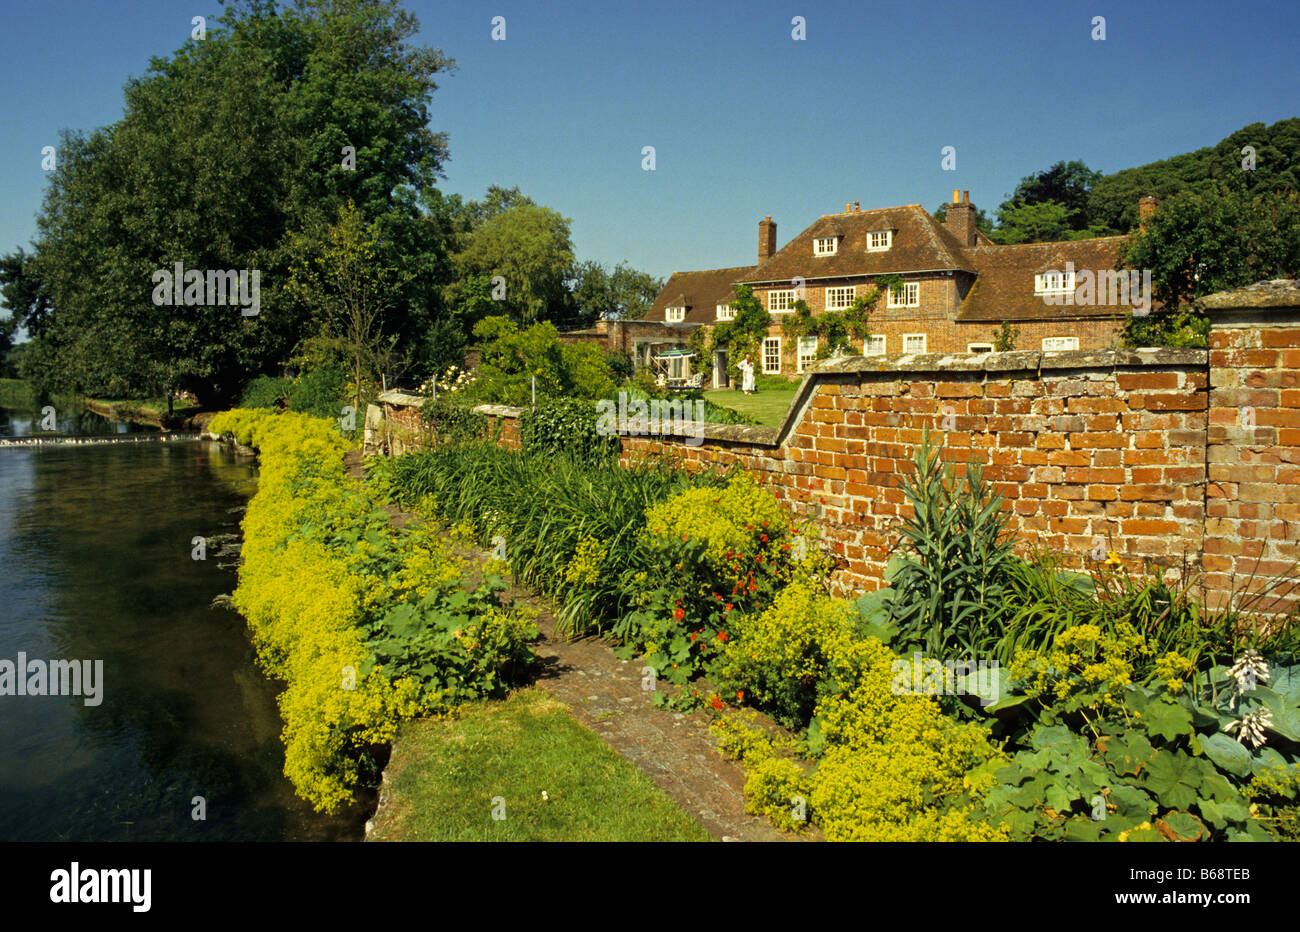 Lady's Mantle (Alchemilla mollis) planted on banks of the Salisbury Avon, Enford Grange, Wiltshire, UK. Stock Photo